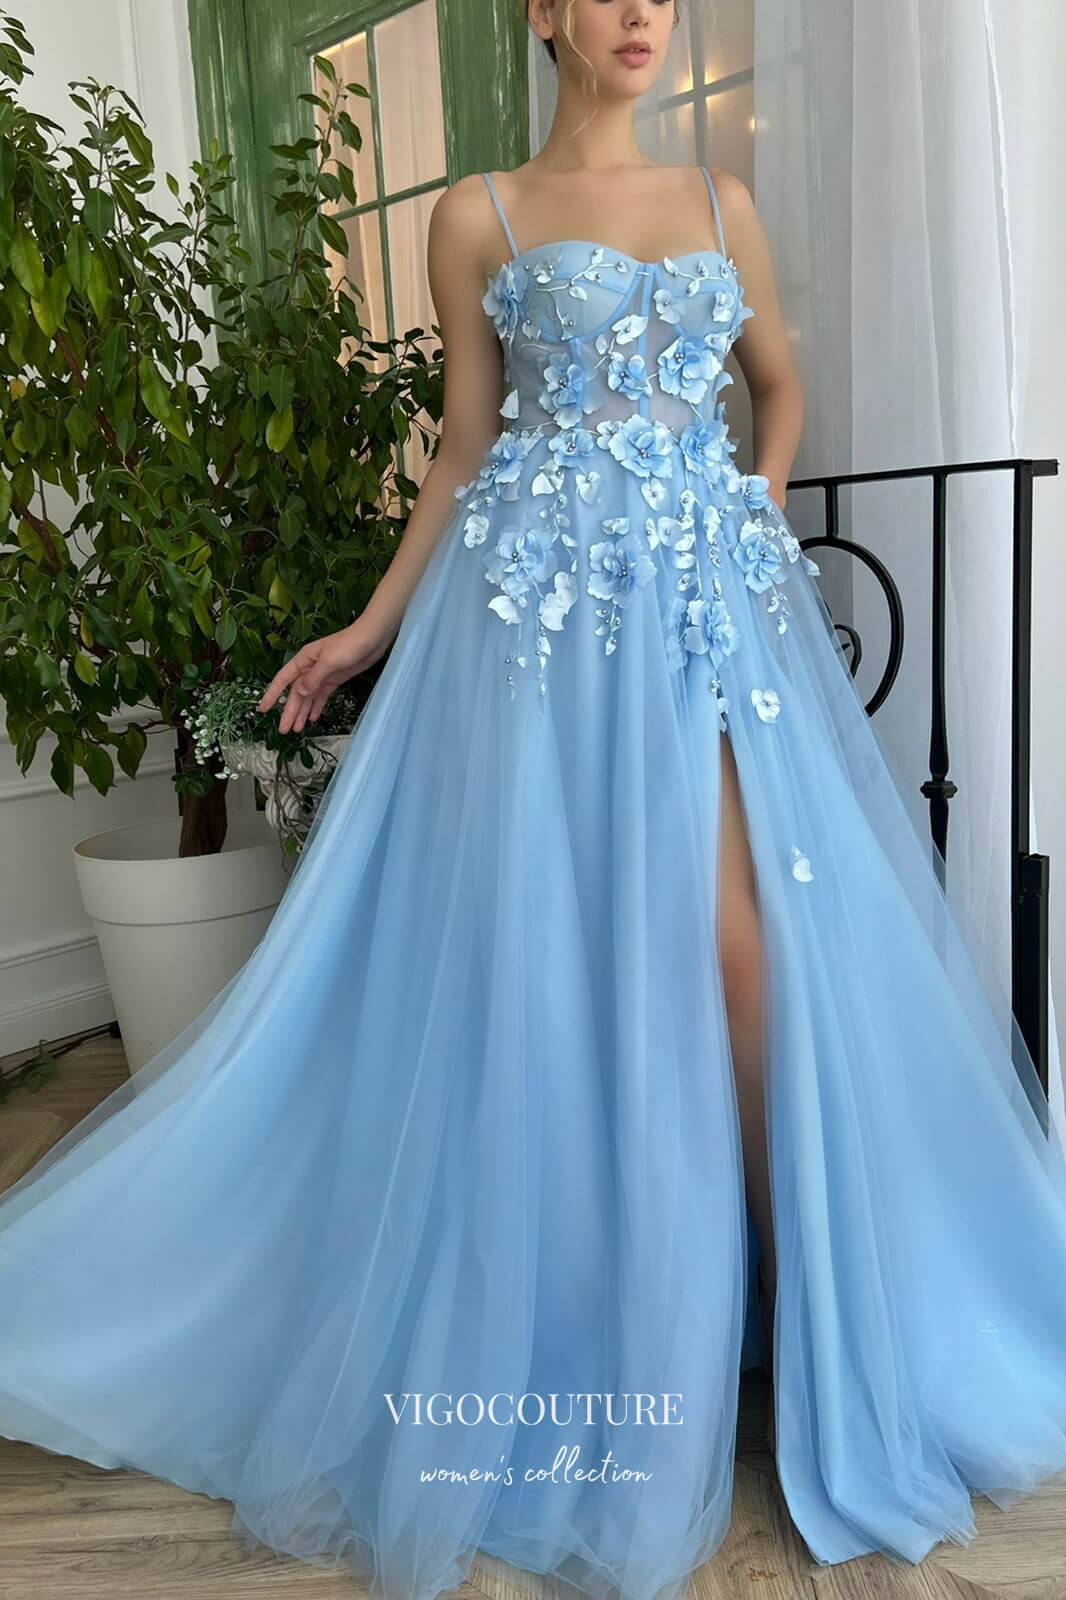 vigocouture-3D Flower Prom Dresses Spaghetti Strap Formal Dresses 21579-Prom Dresses-vigocouture-Light Blue-US2-